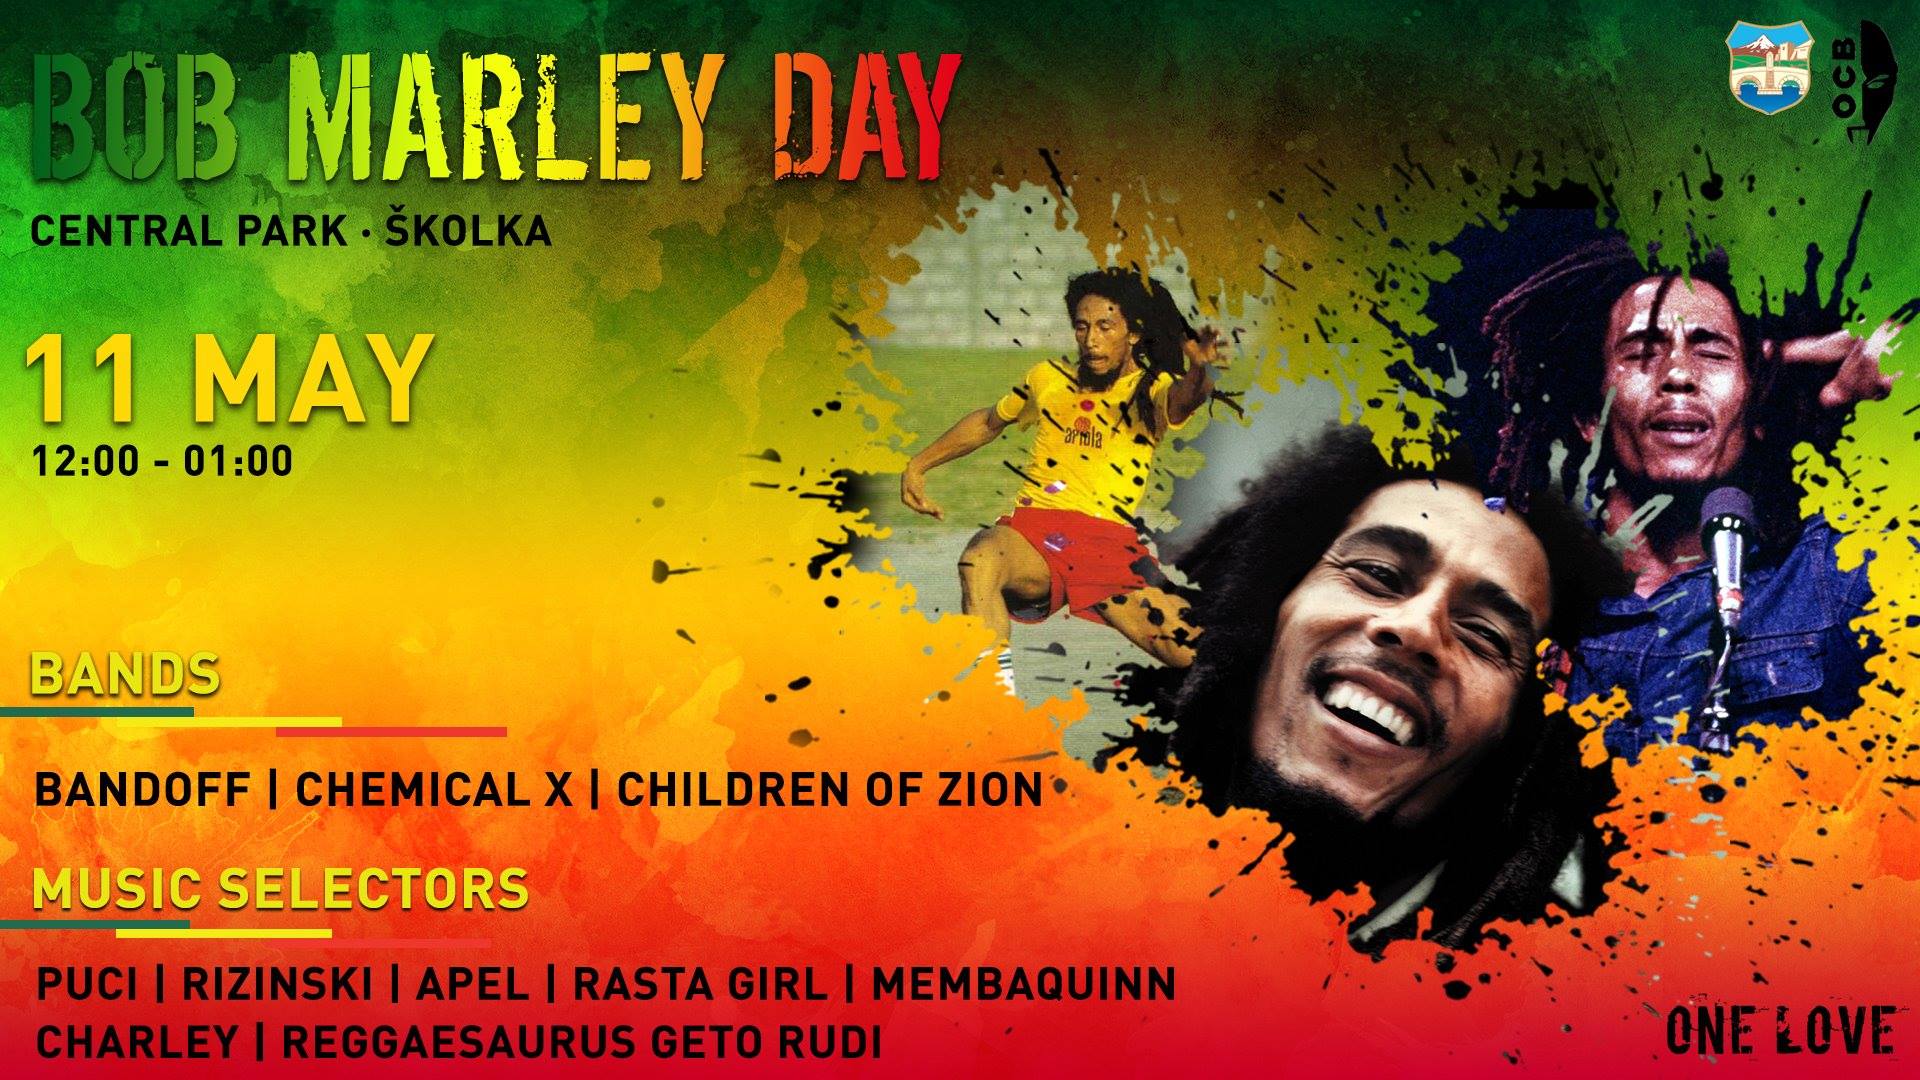 Bob Marley Day – One Love – 11 May (Petok)